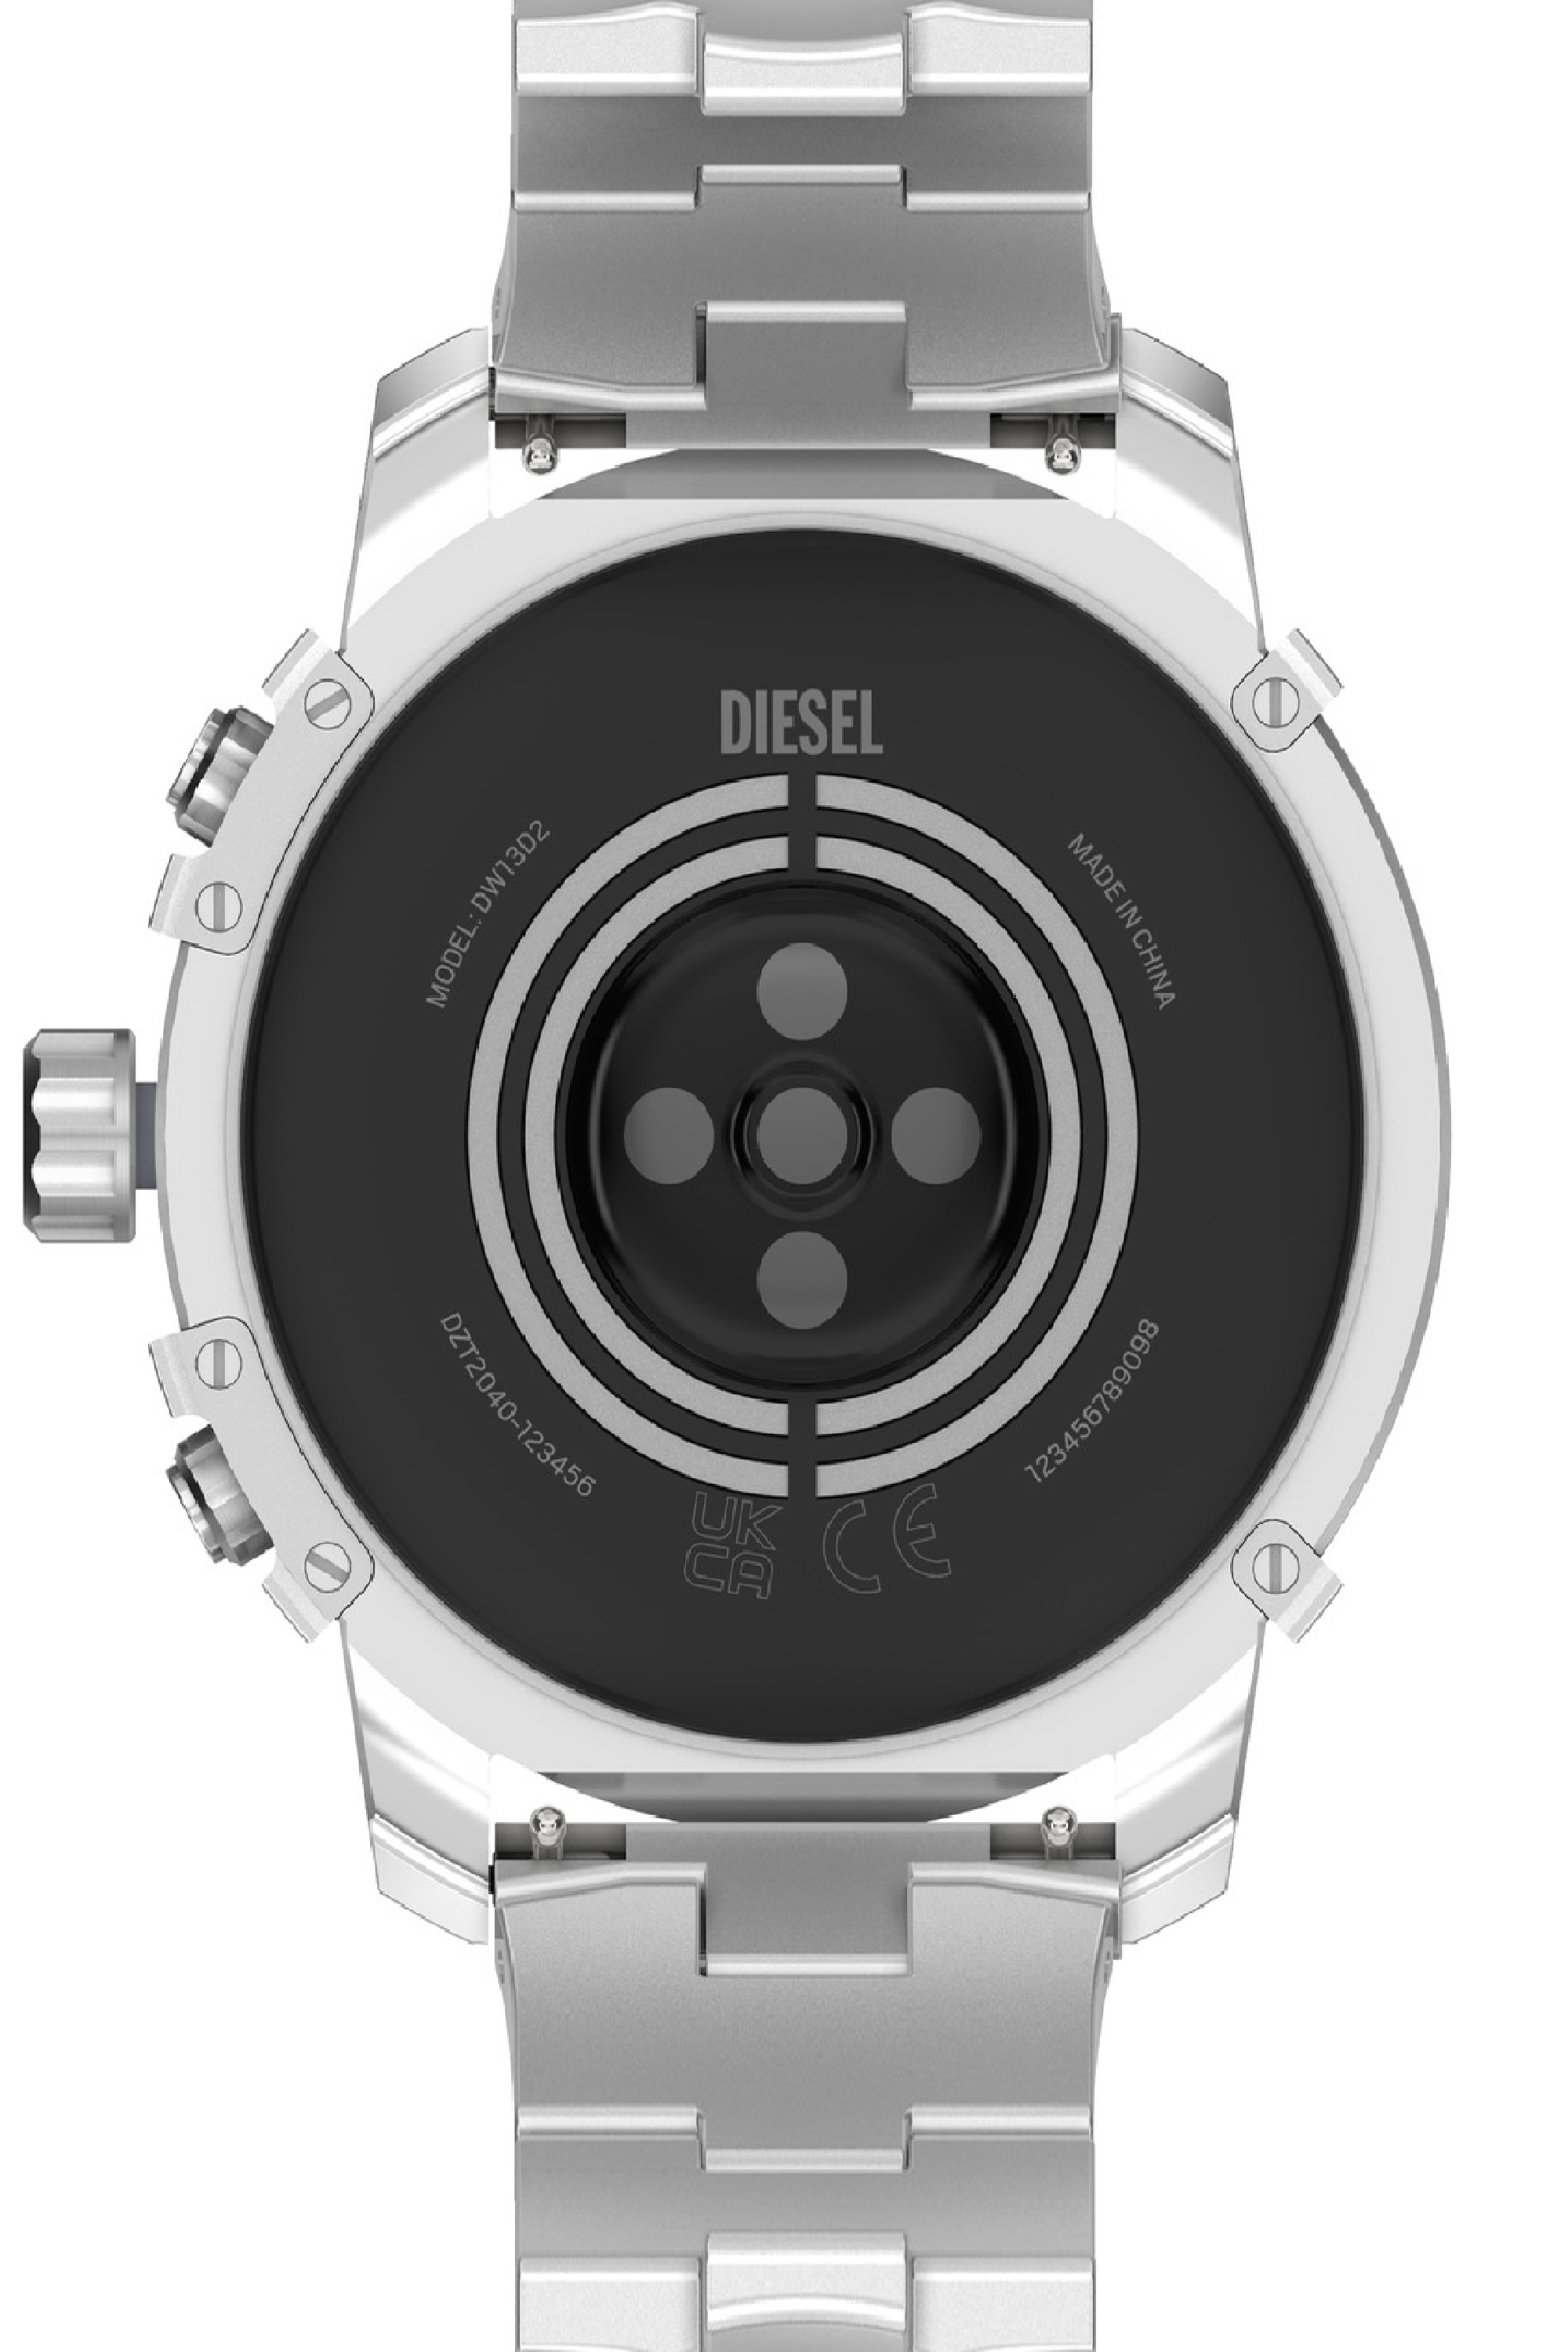 Diesel - DZT2040, Man Griffed stainless steel smartwatch in Silver - Image 4